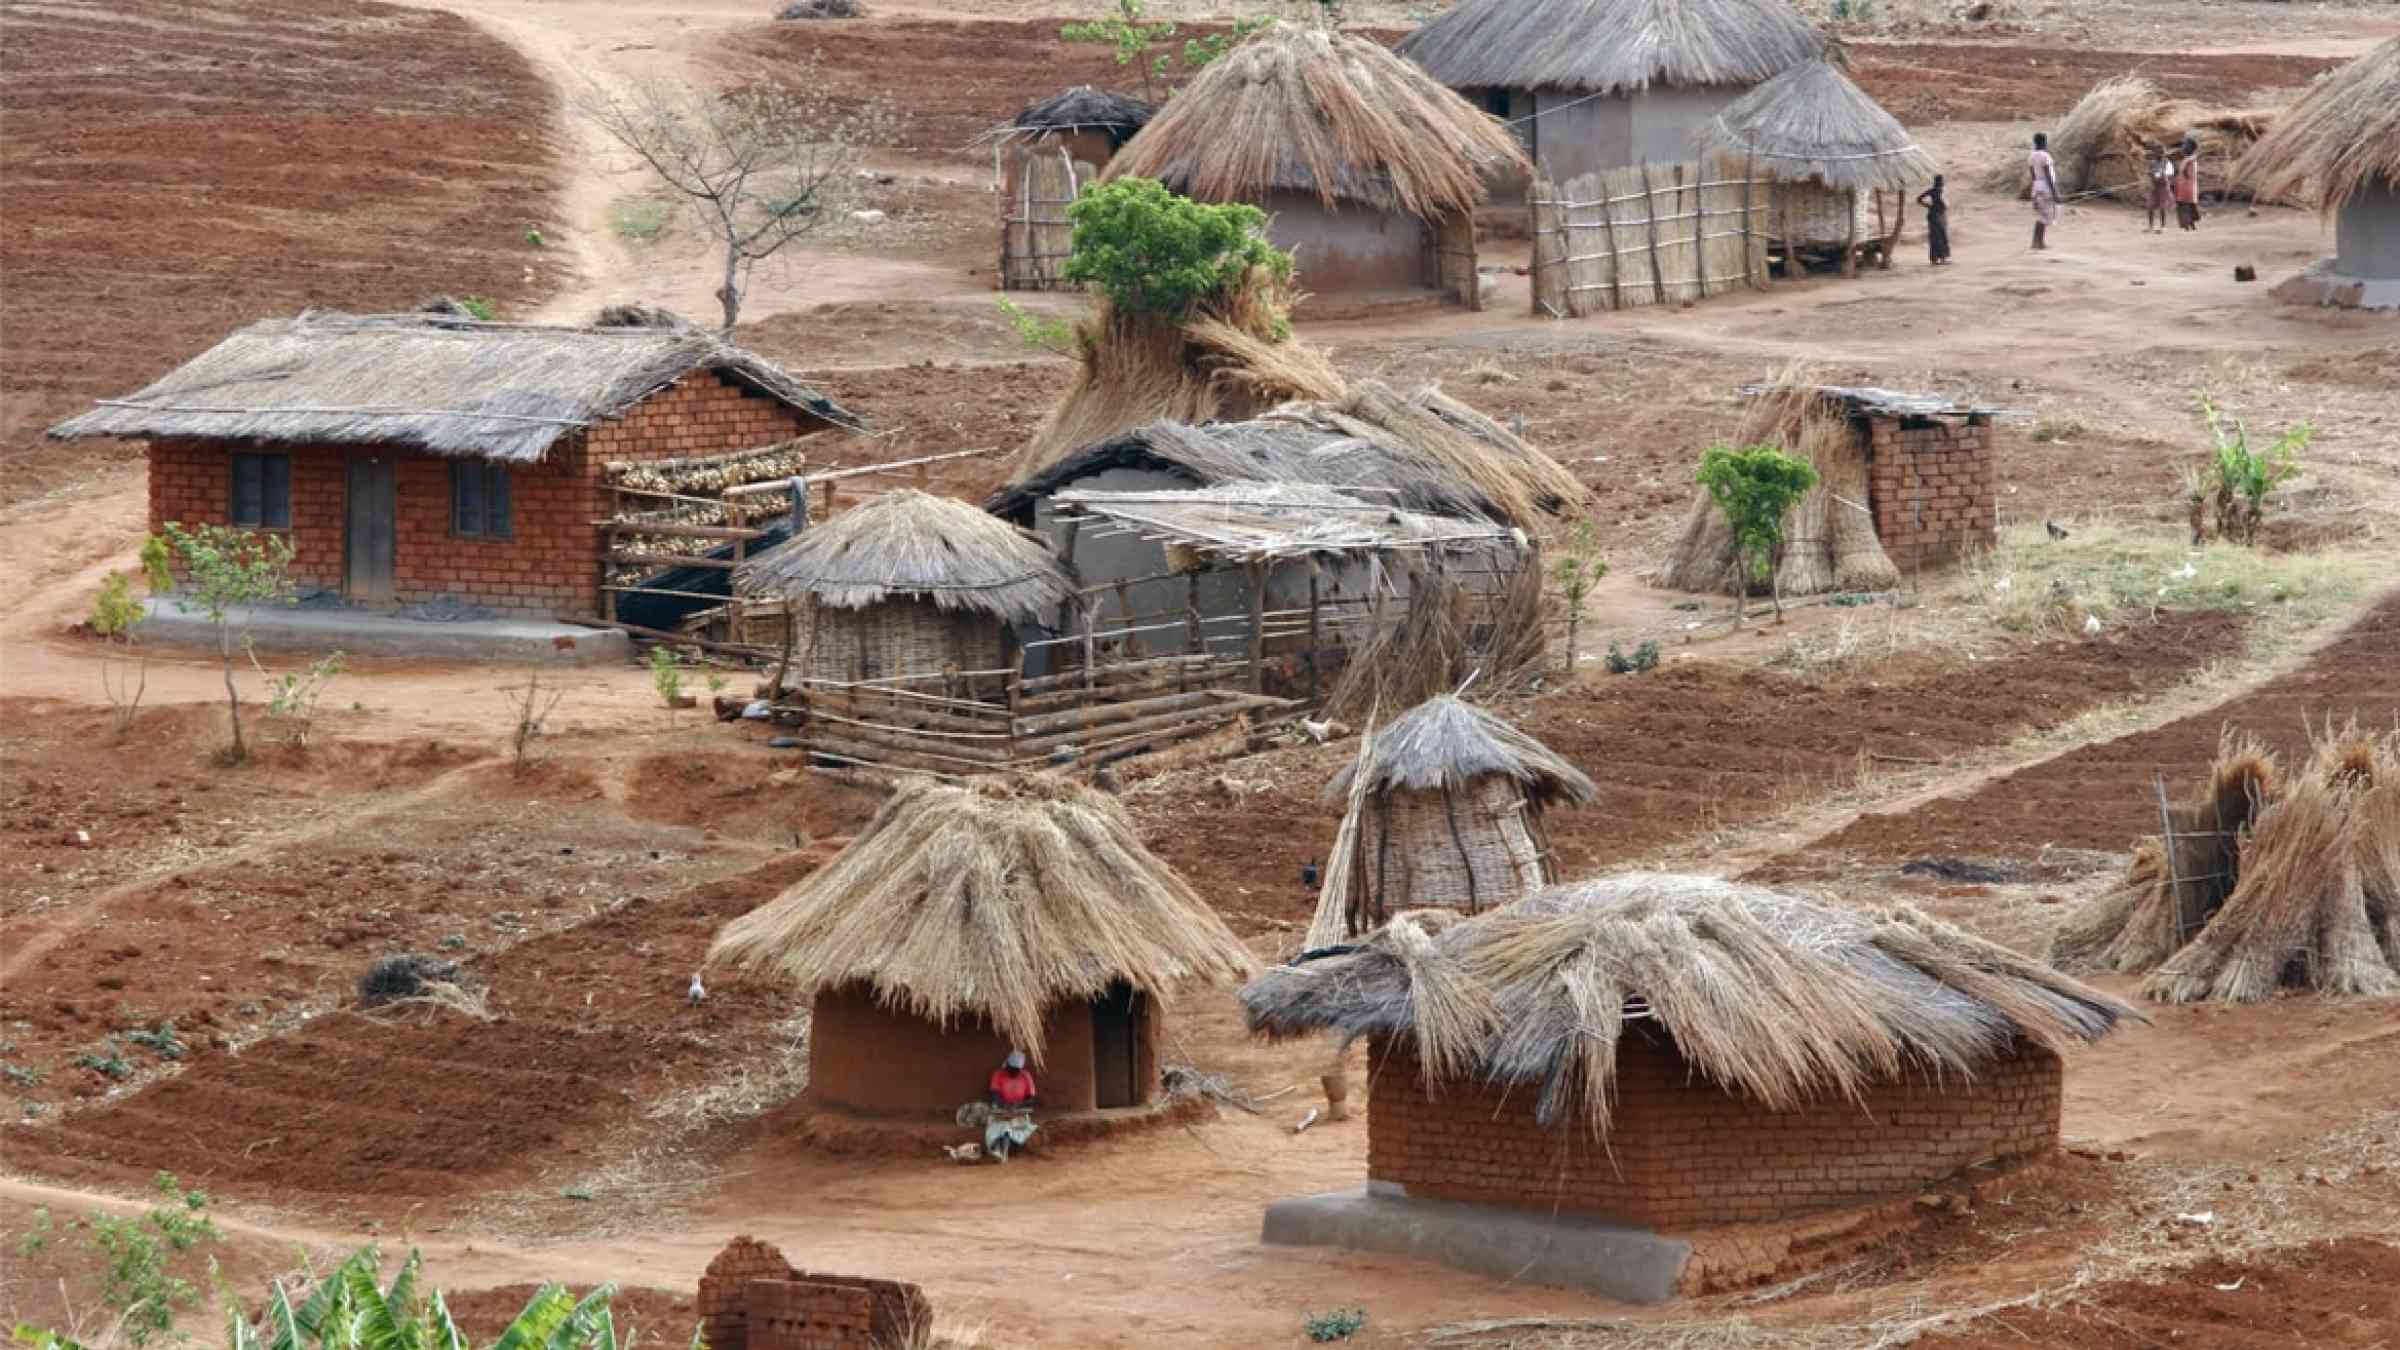 Rural village in Malawi